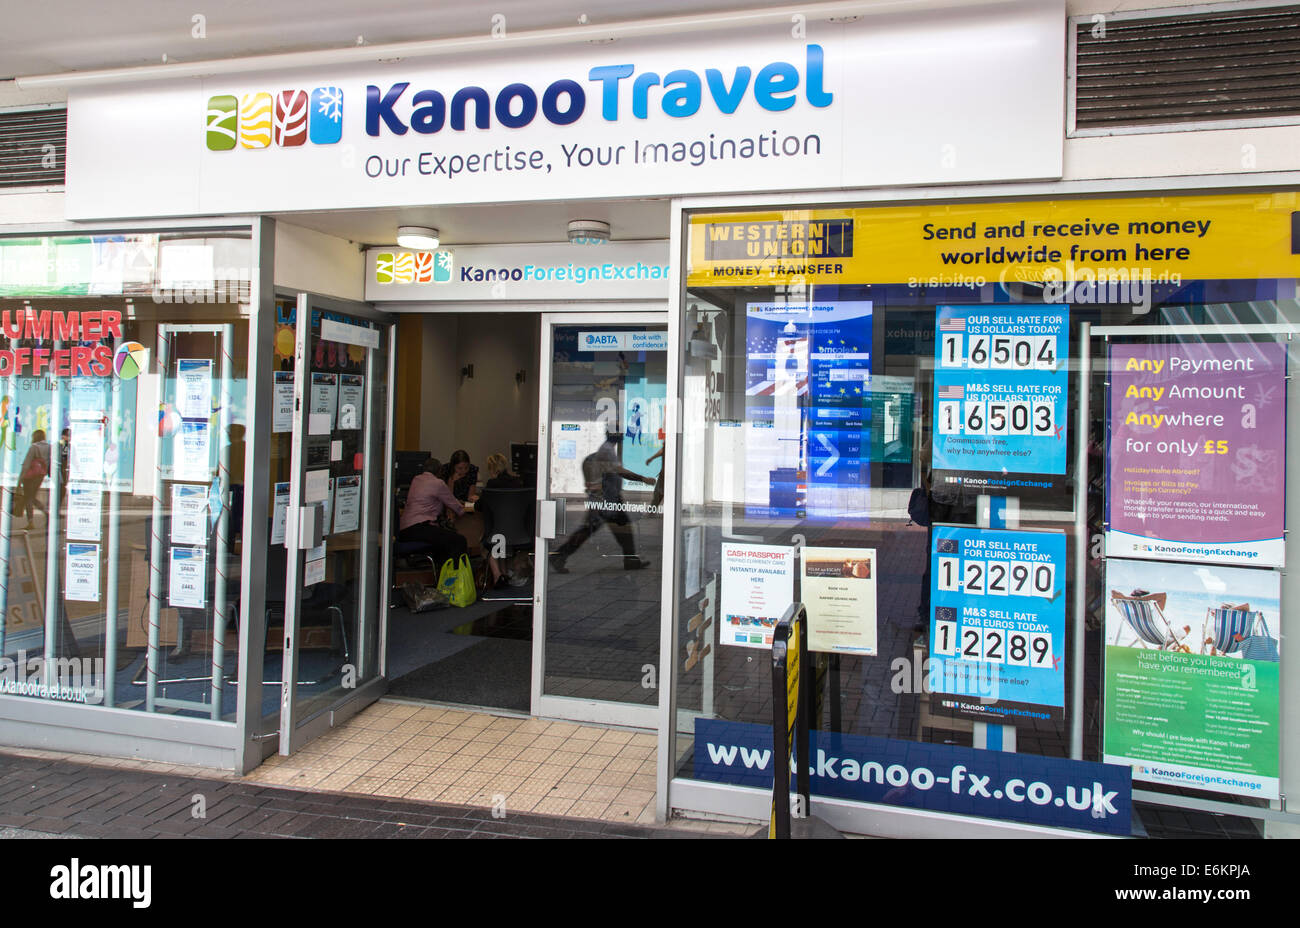 kanoo travel limited